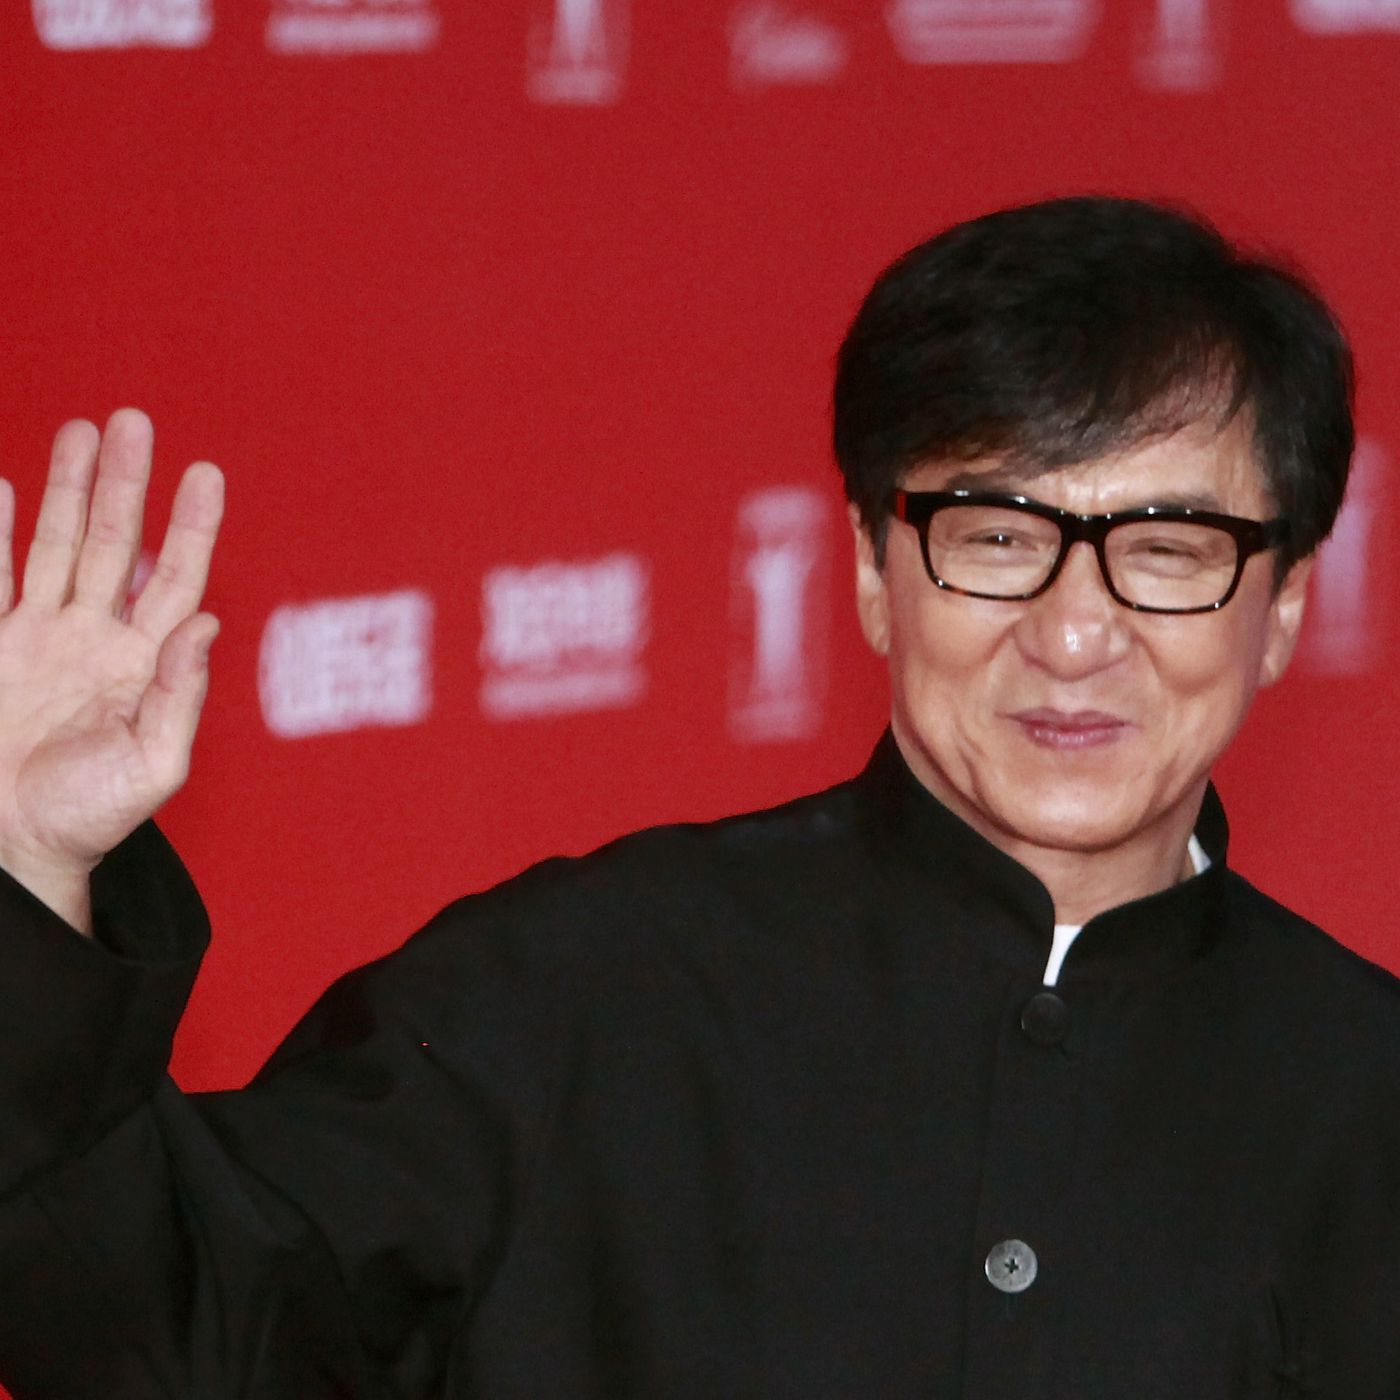 Muere Jackie Chan por luchar varios meses con cáncer de Colon